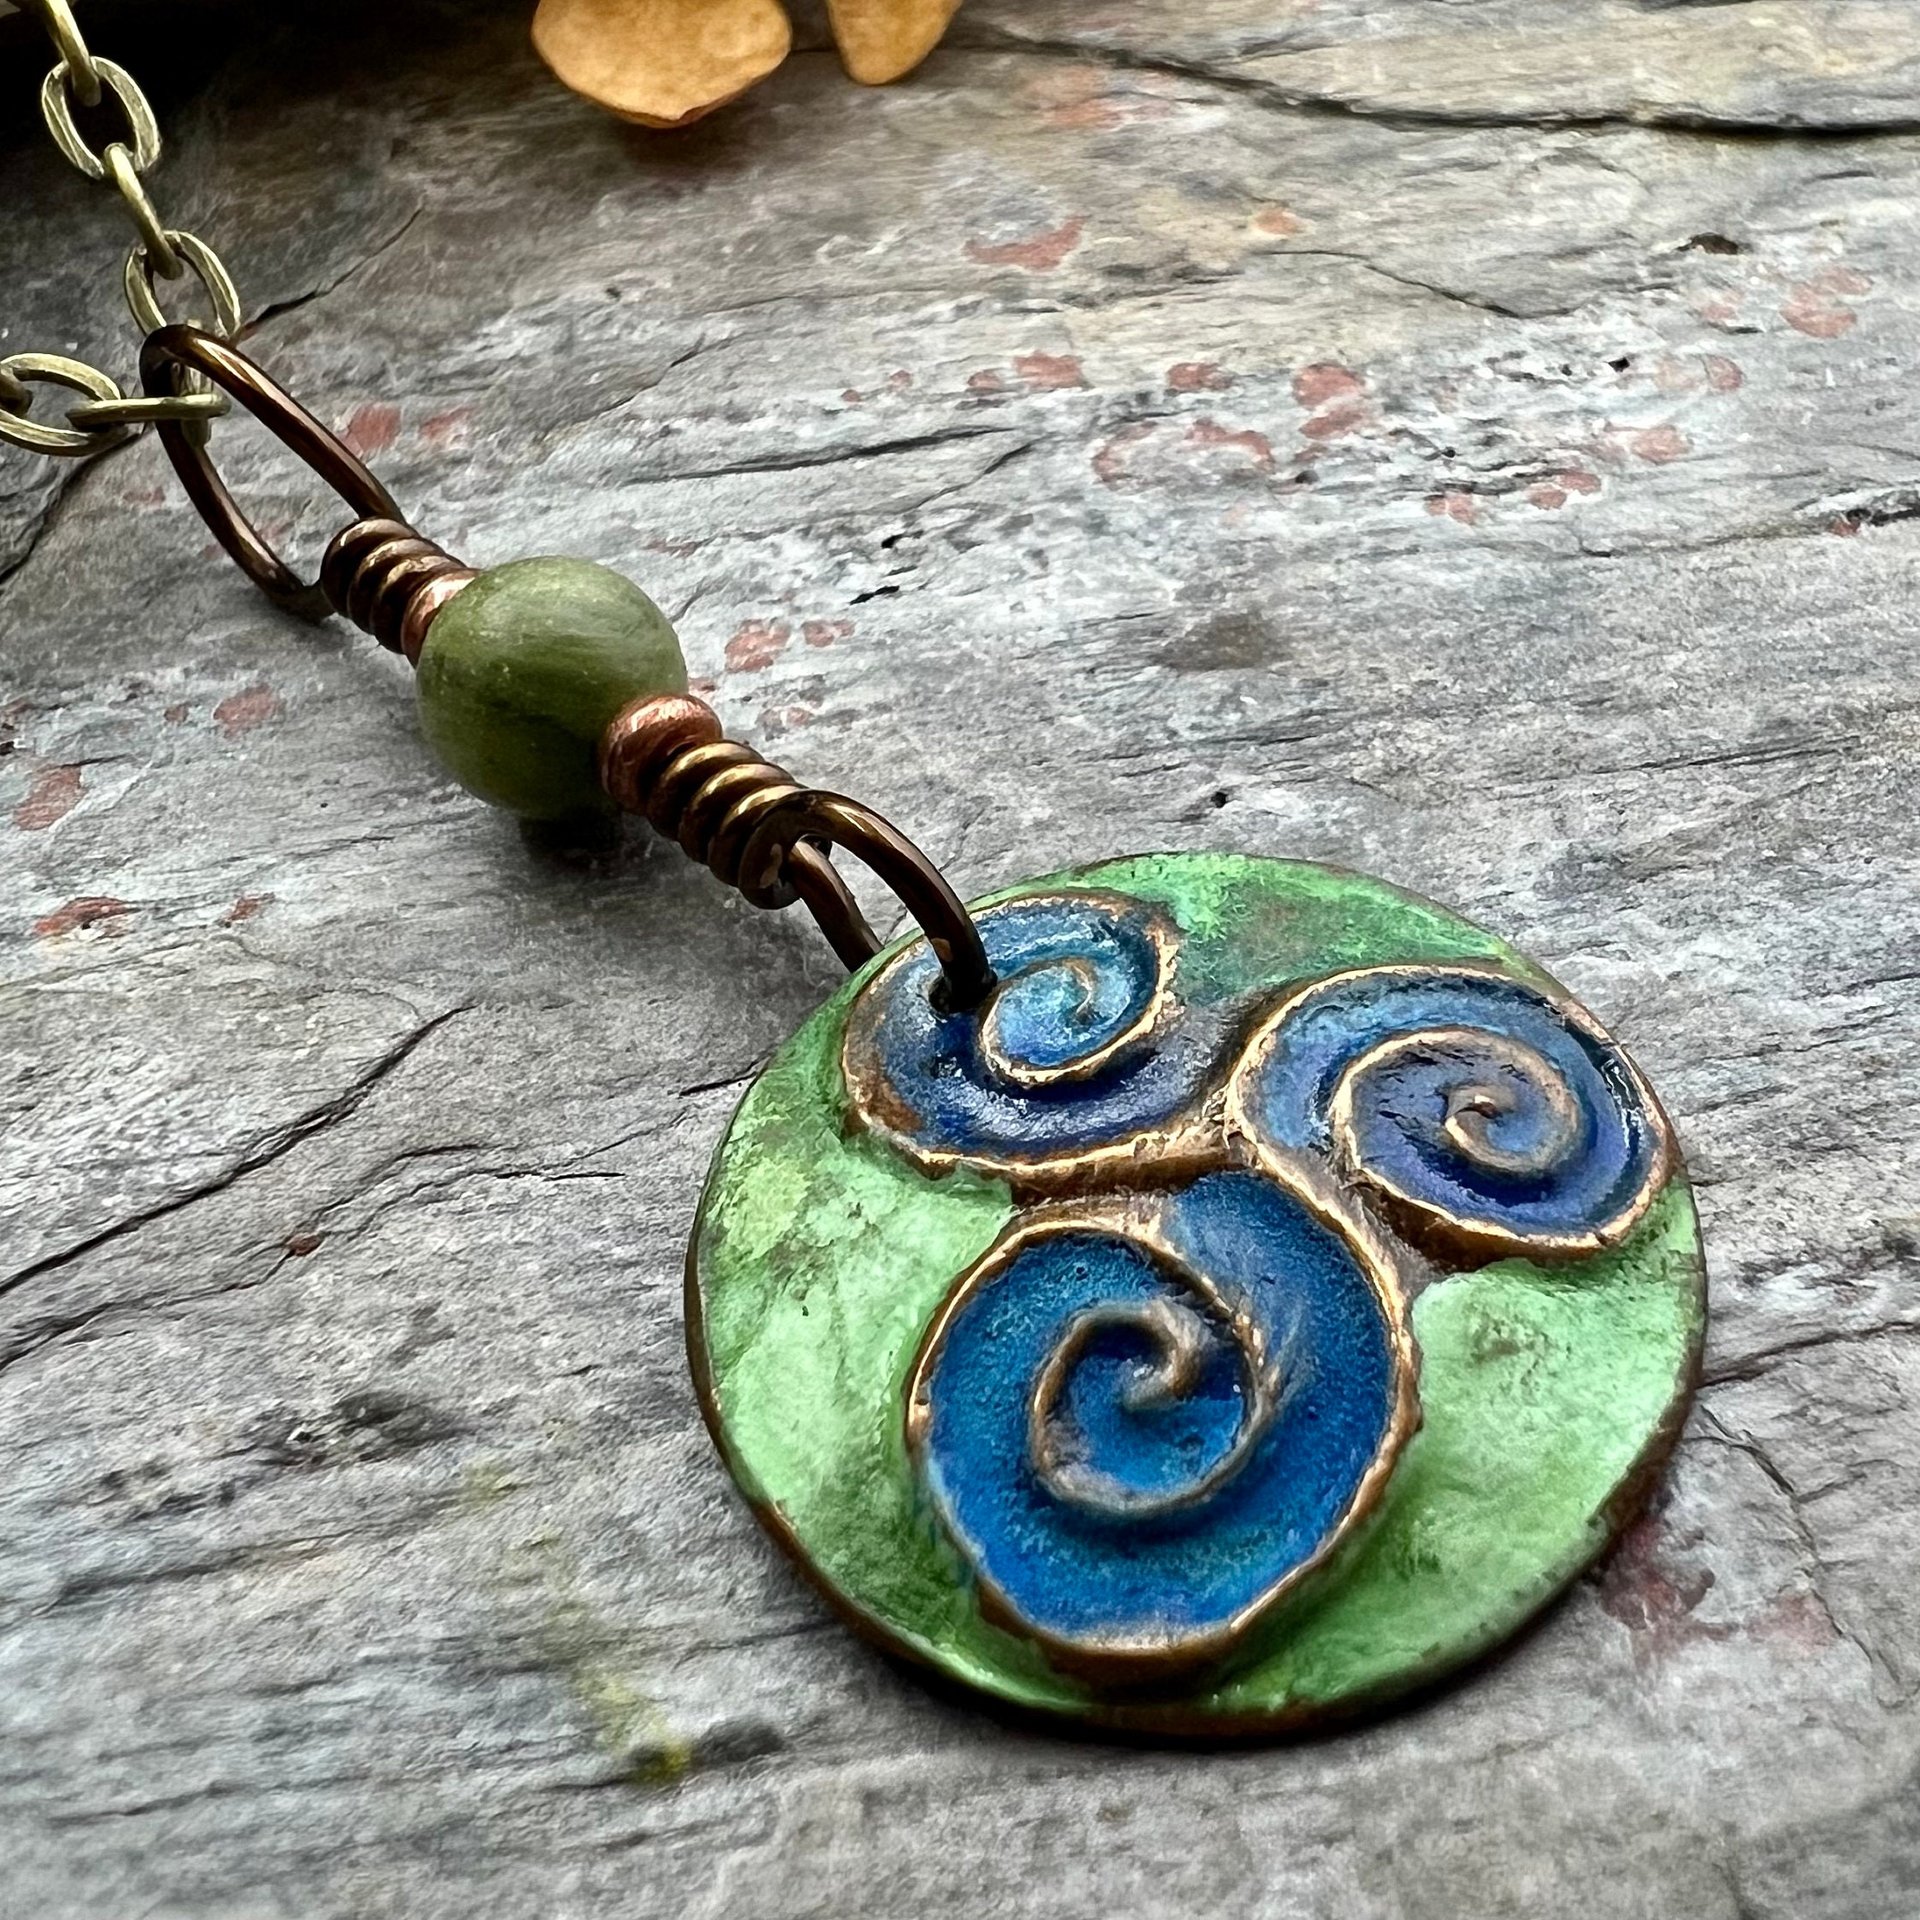 Triskele Pendant, Triskelion, Triple Spiral, Copper Patina, Irish Celtic Jewelry, Czech Glass Bead, Pagan Wicca, Triple Goddess Charm